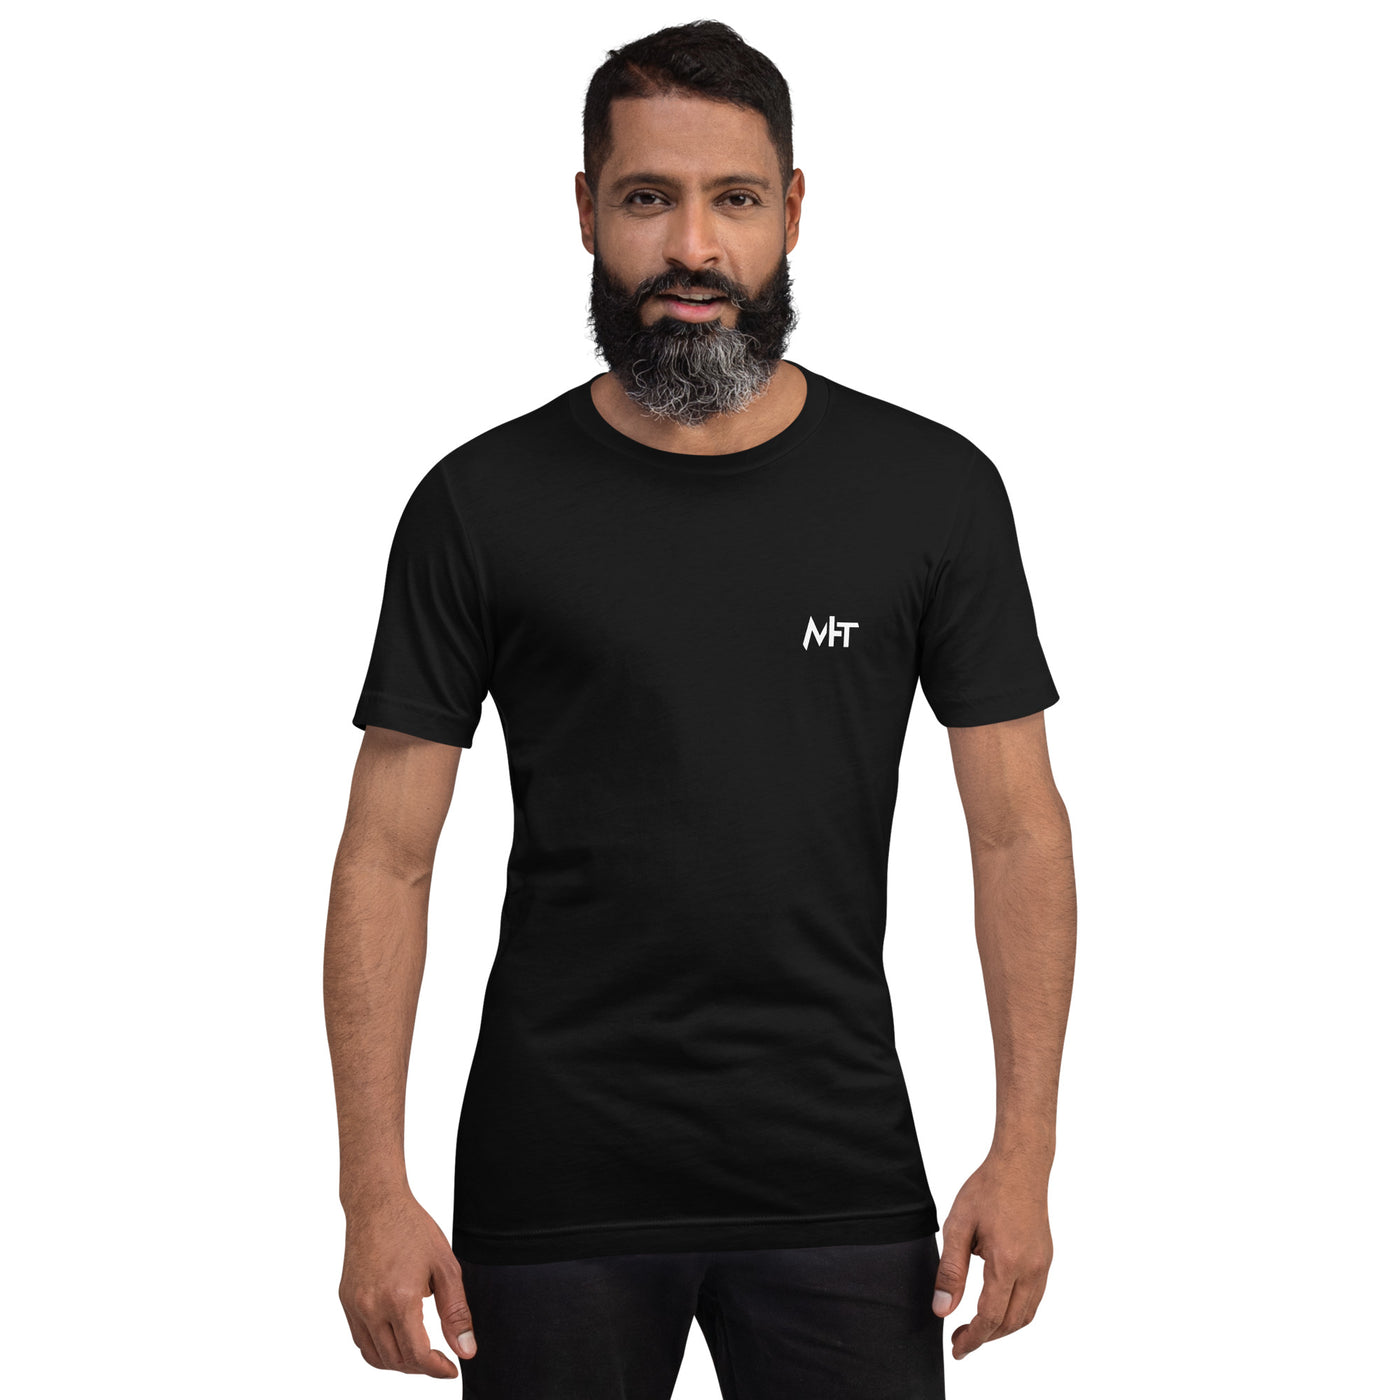 Ransomware v1 - Unisex t-shirt (back print)